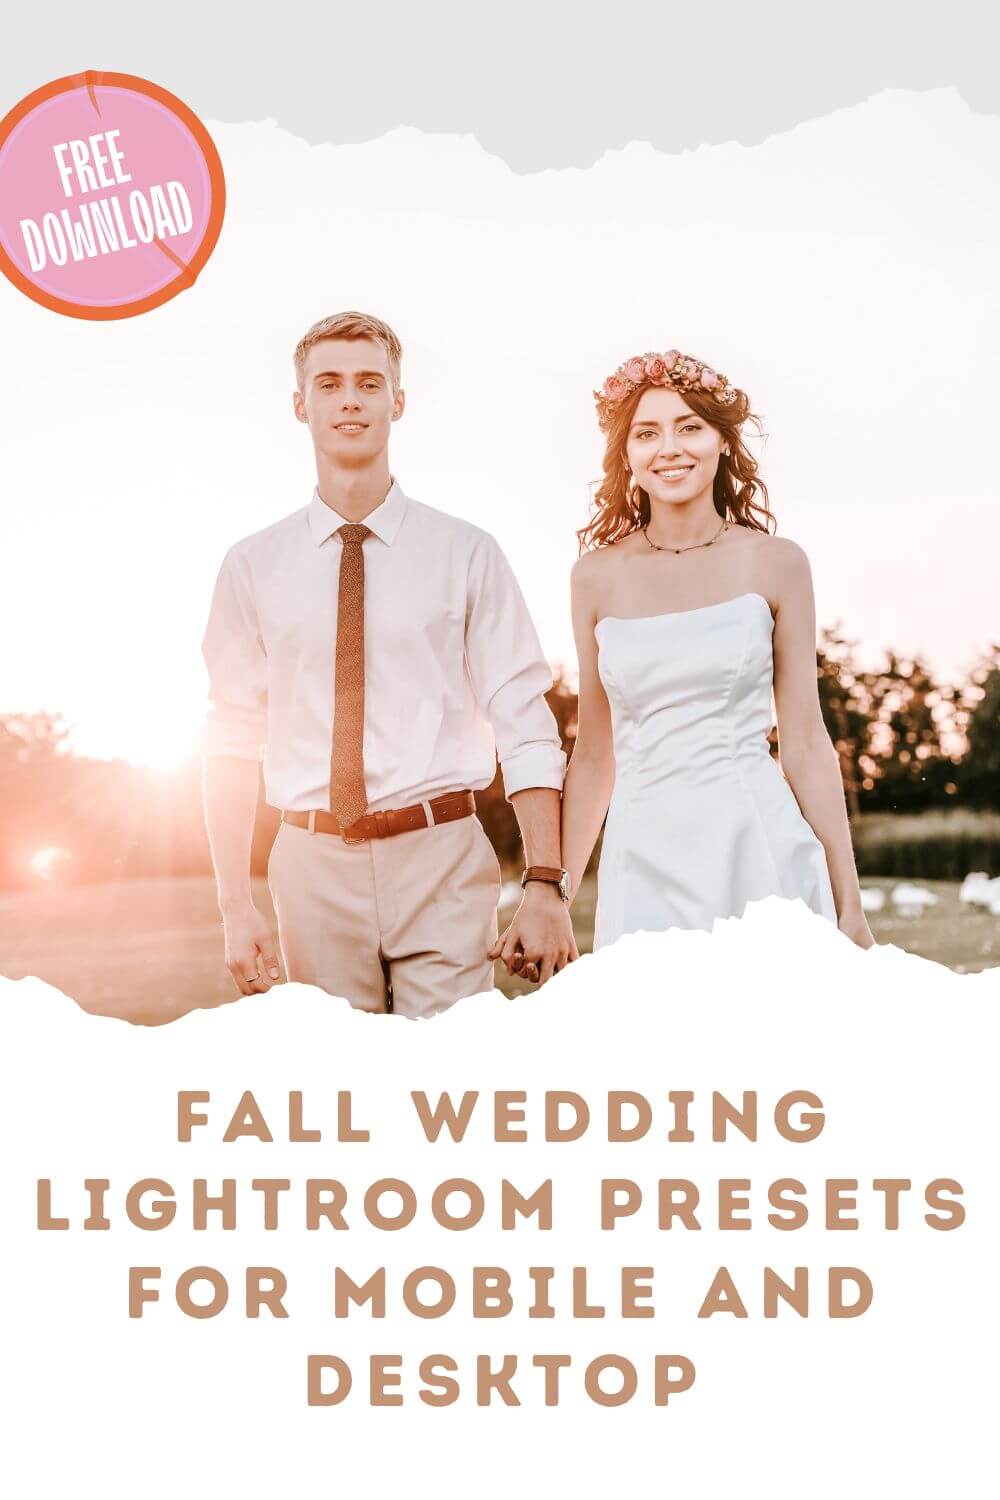 Fall Wedding Lightroom Presets For Mobile & Desktop Lightroom Preset For Mobile and Desktop Pinterest